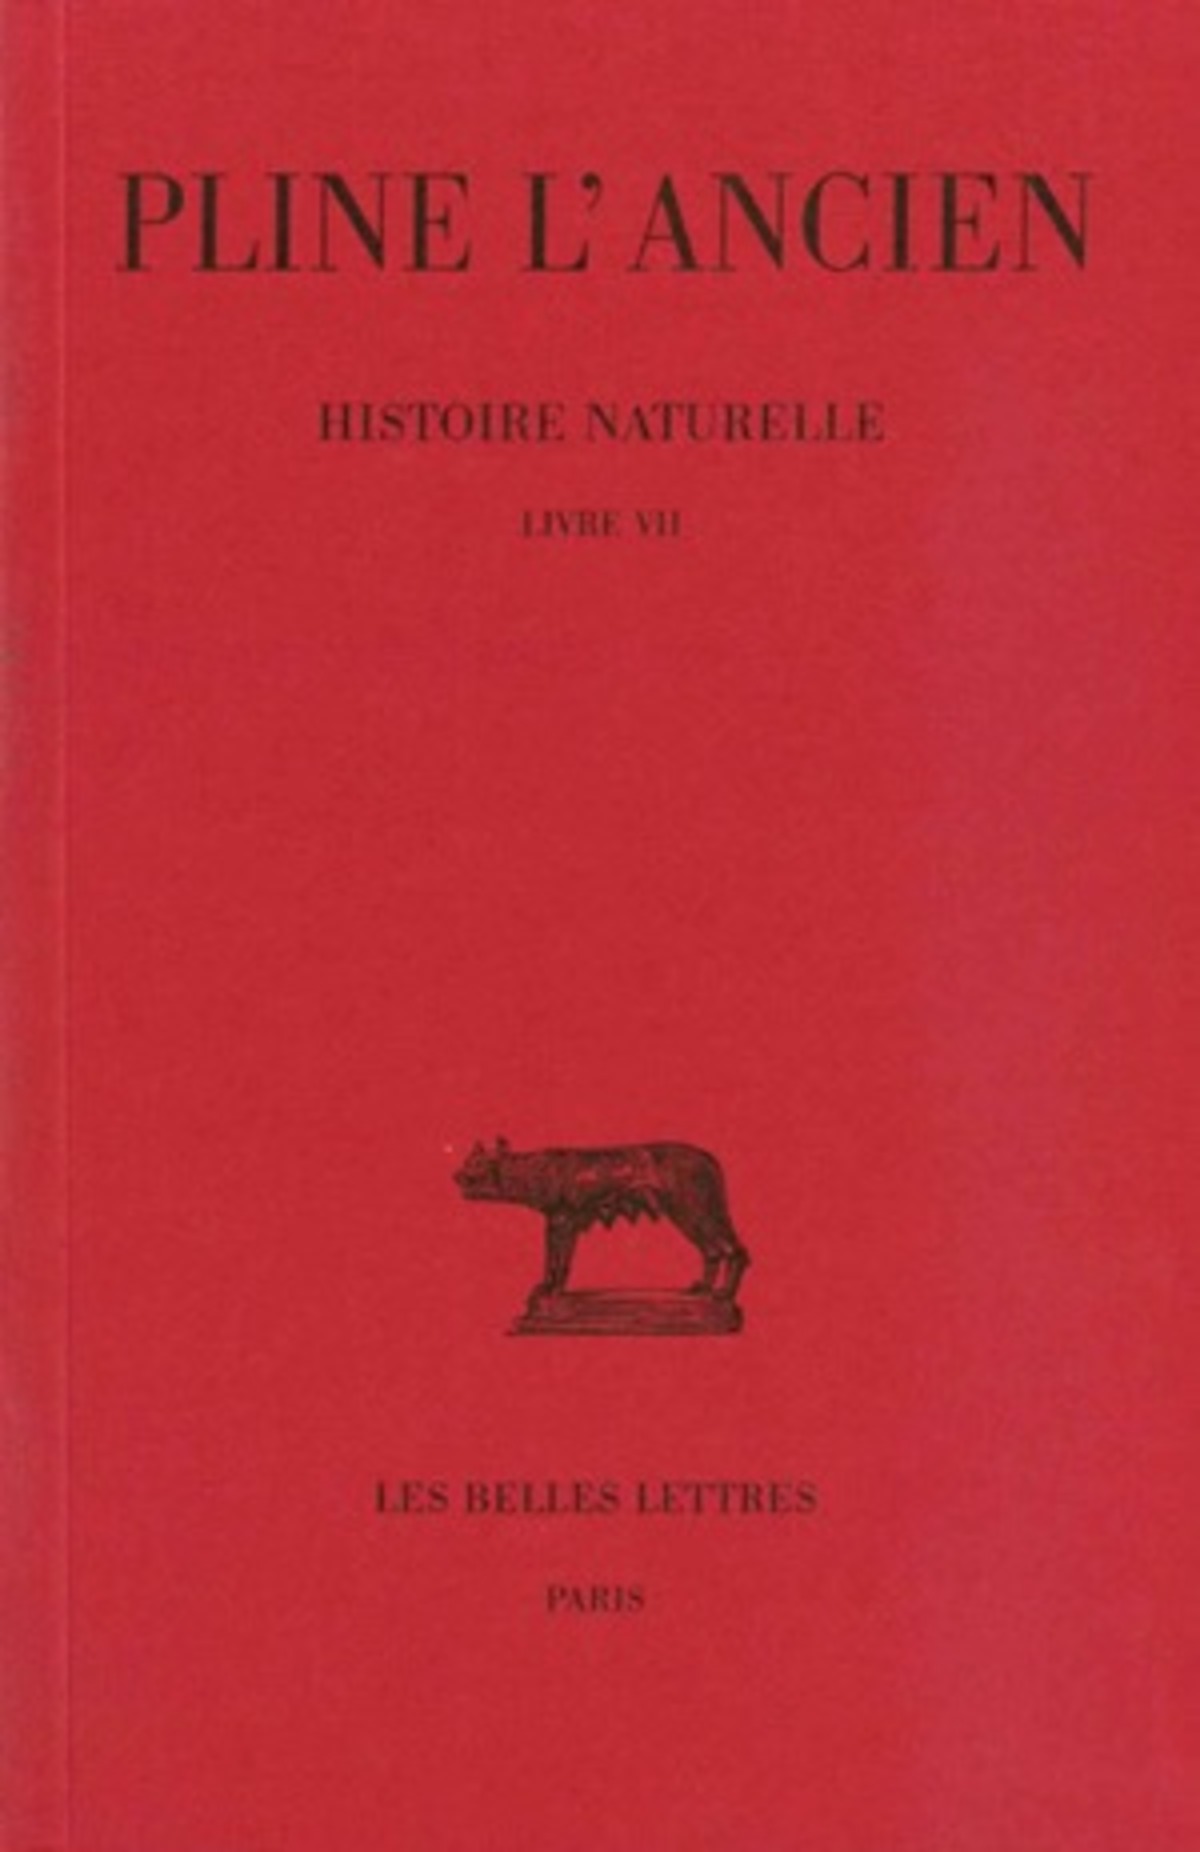 Histoire naturelle. Livre VII